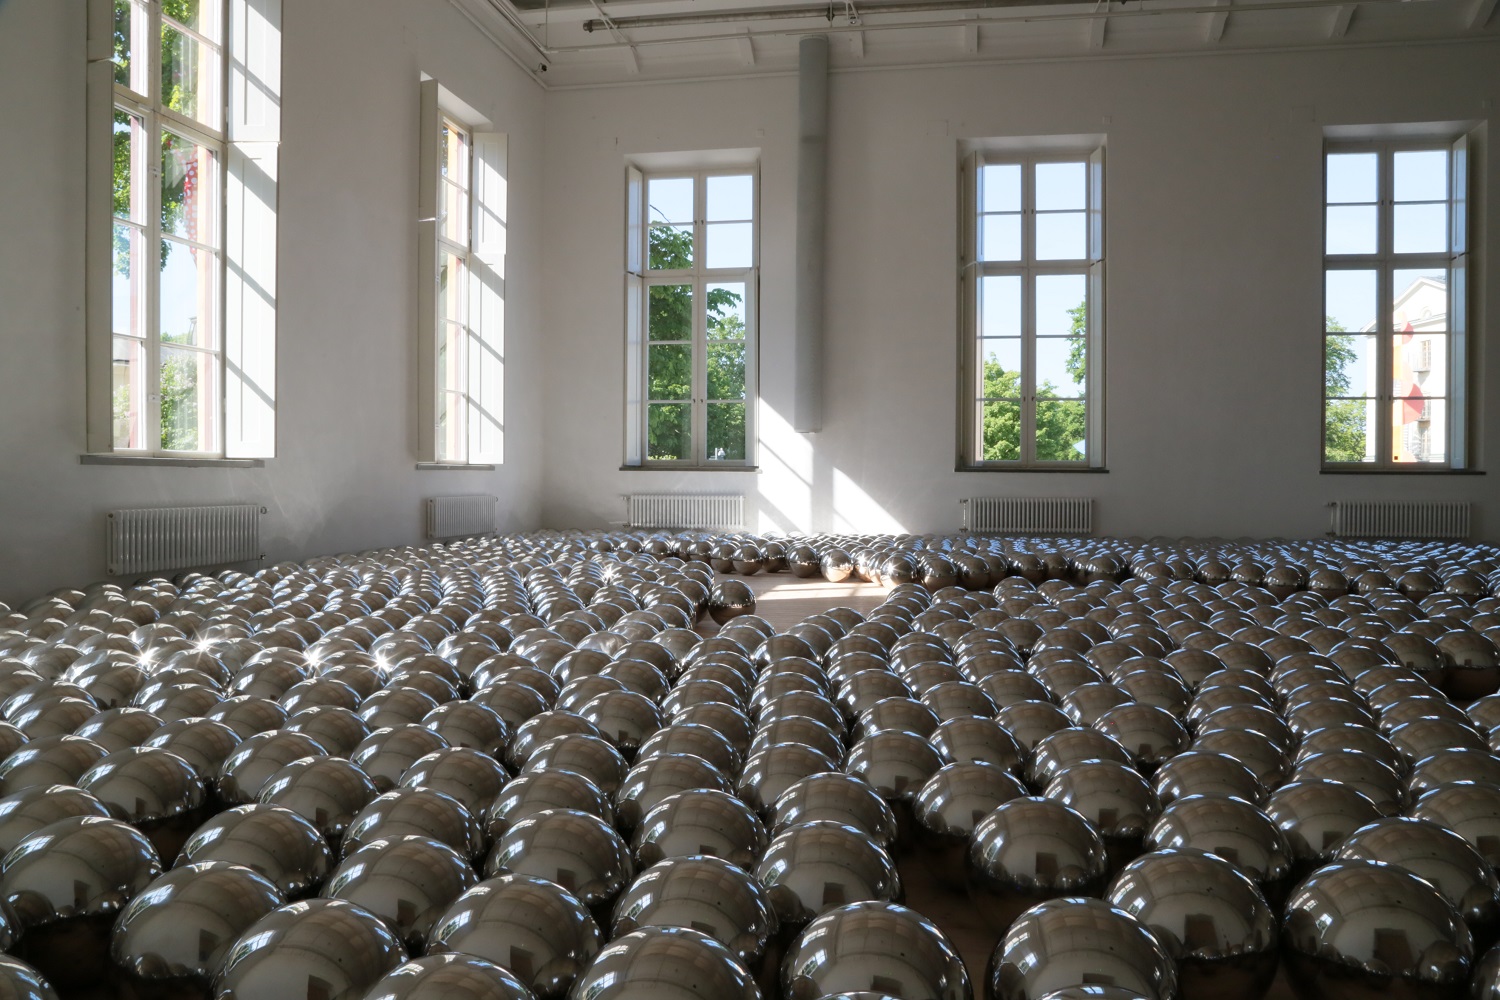 A field of small steel balls